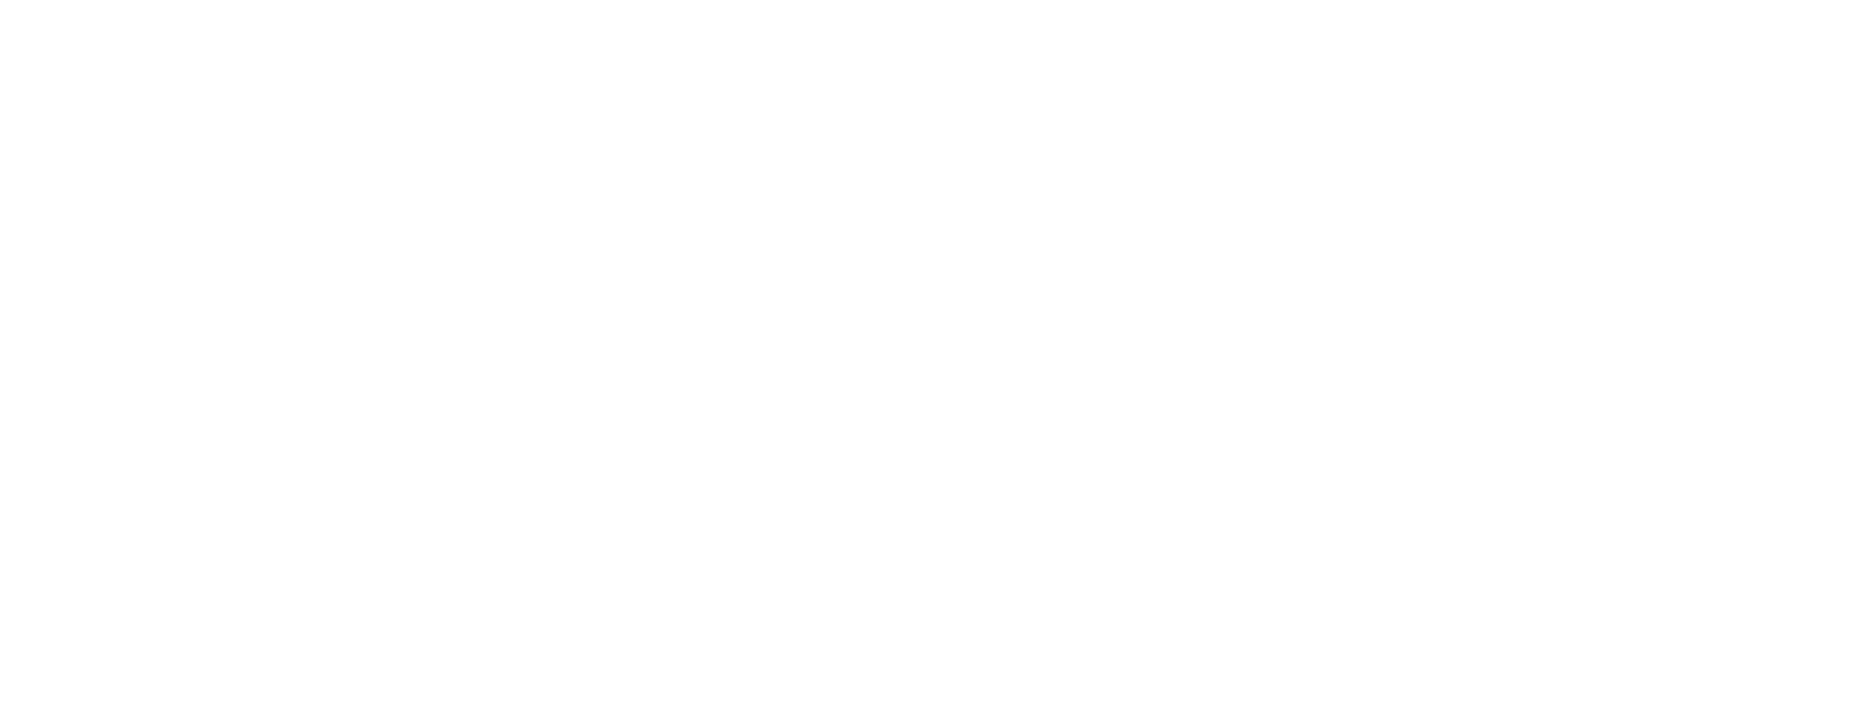 NASW Foundation Logo